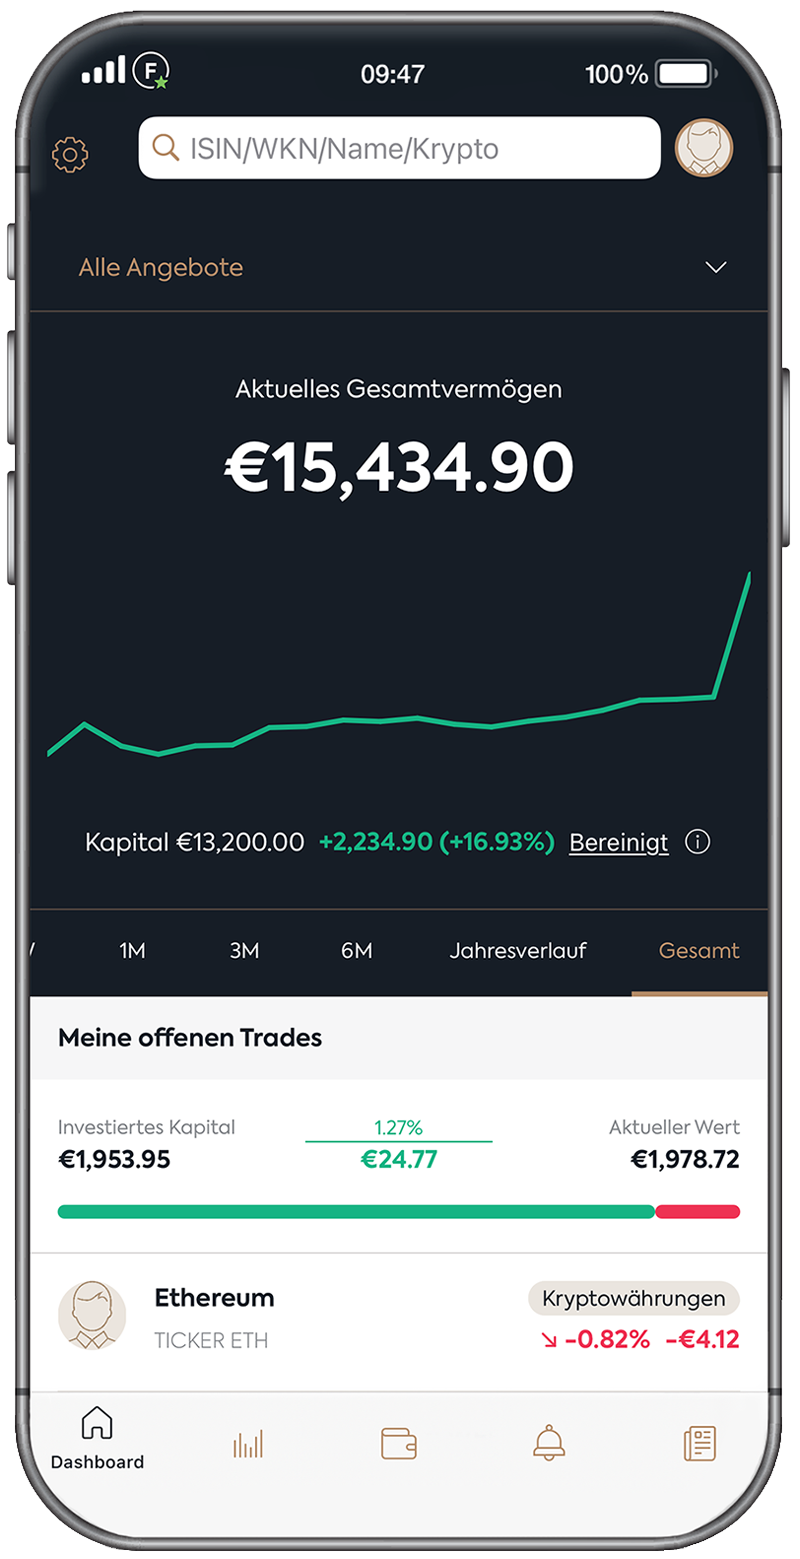 Trade crypto with the Follow MyMoney broker app